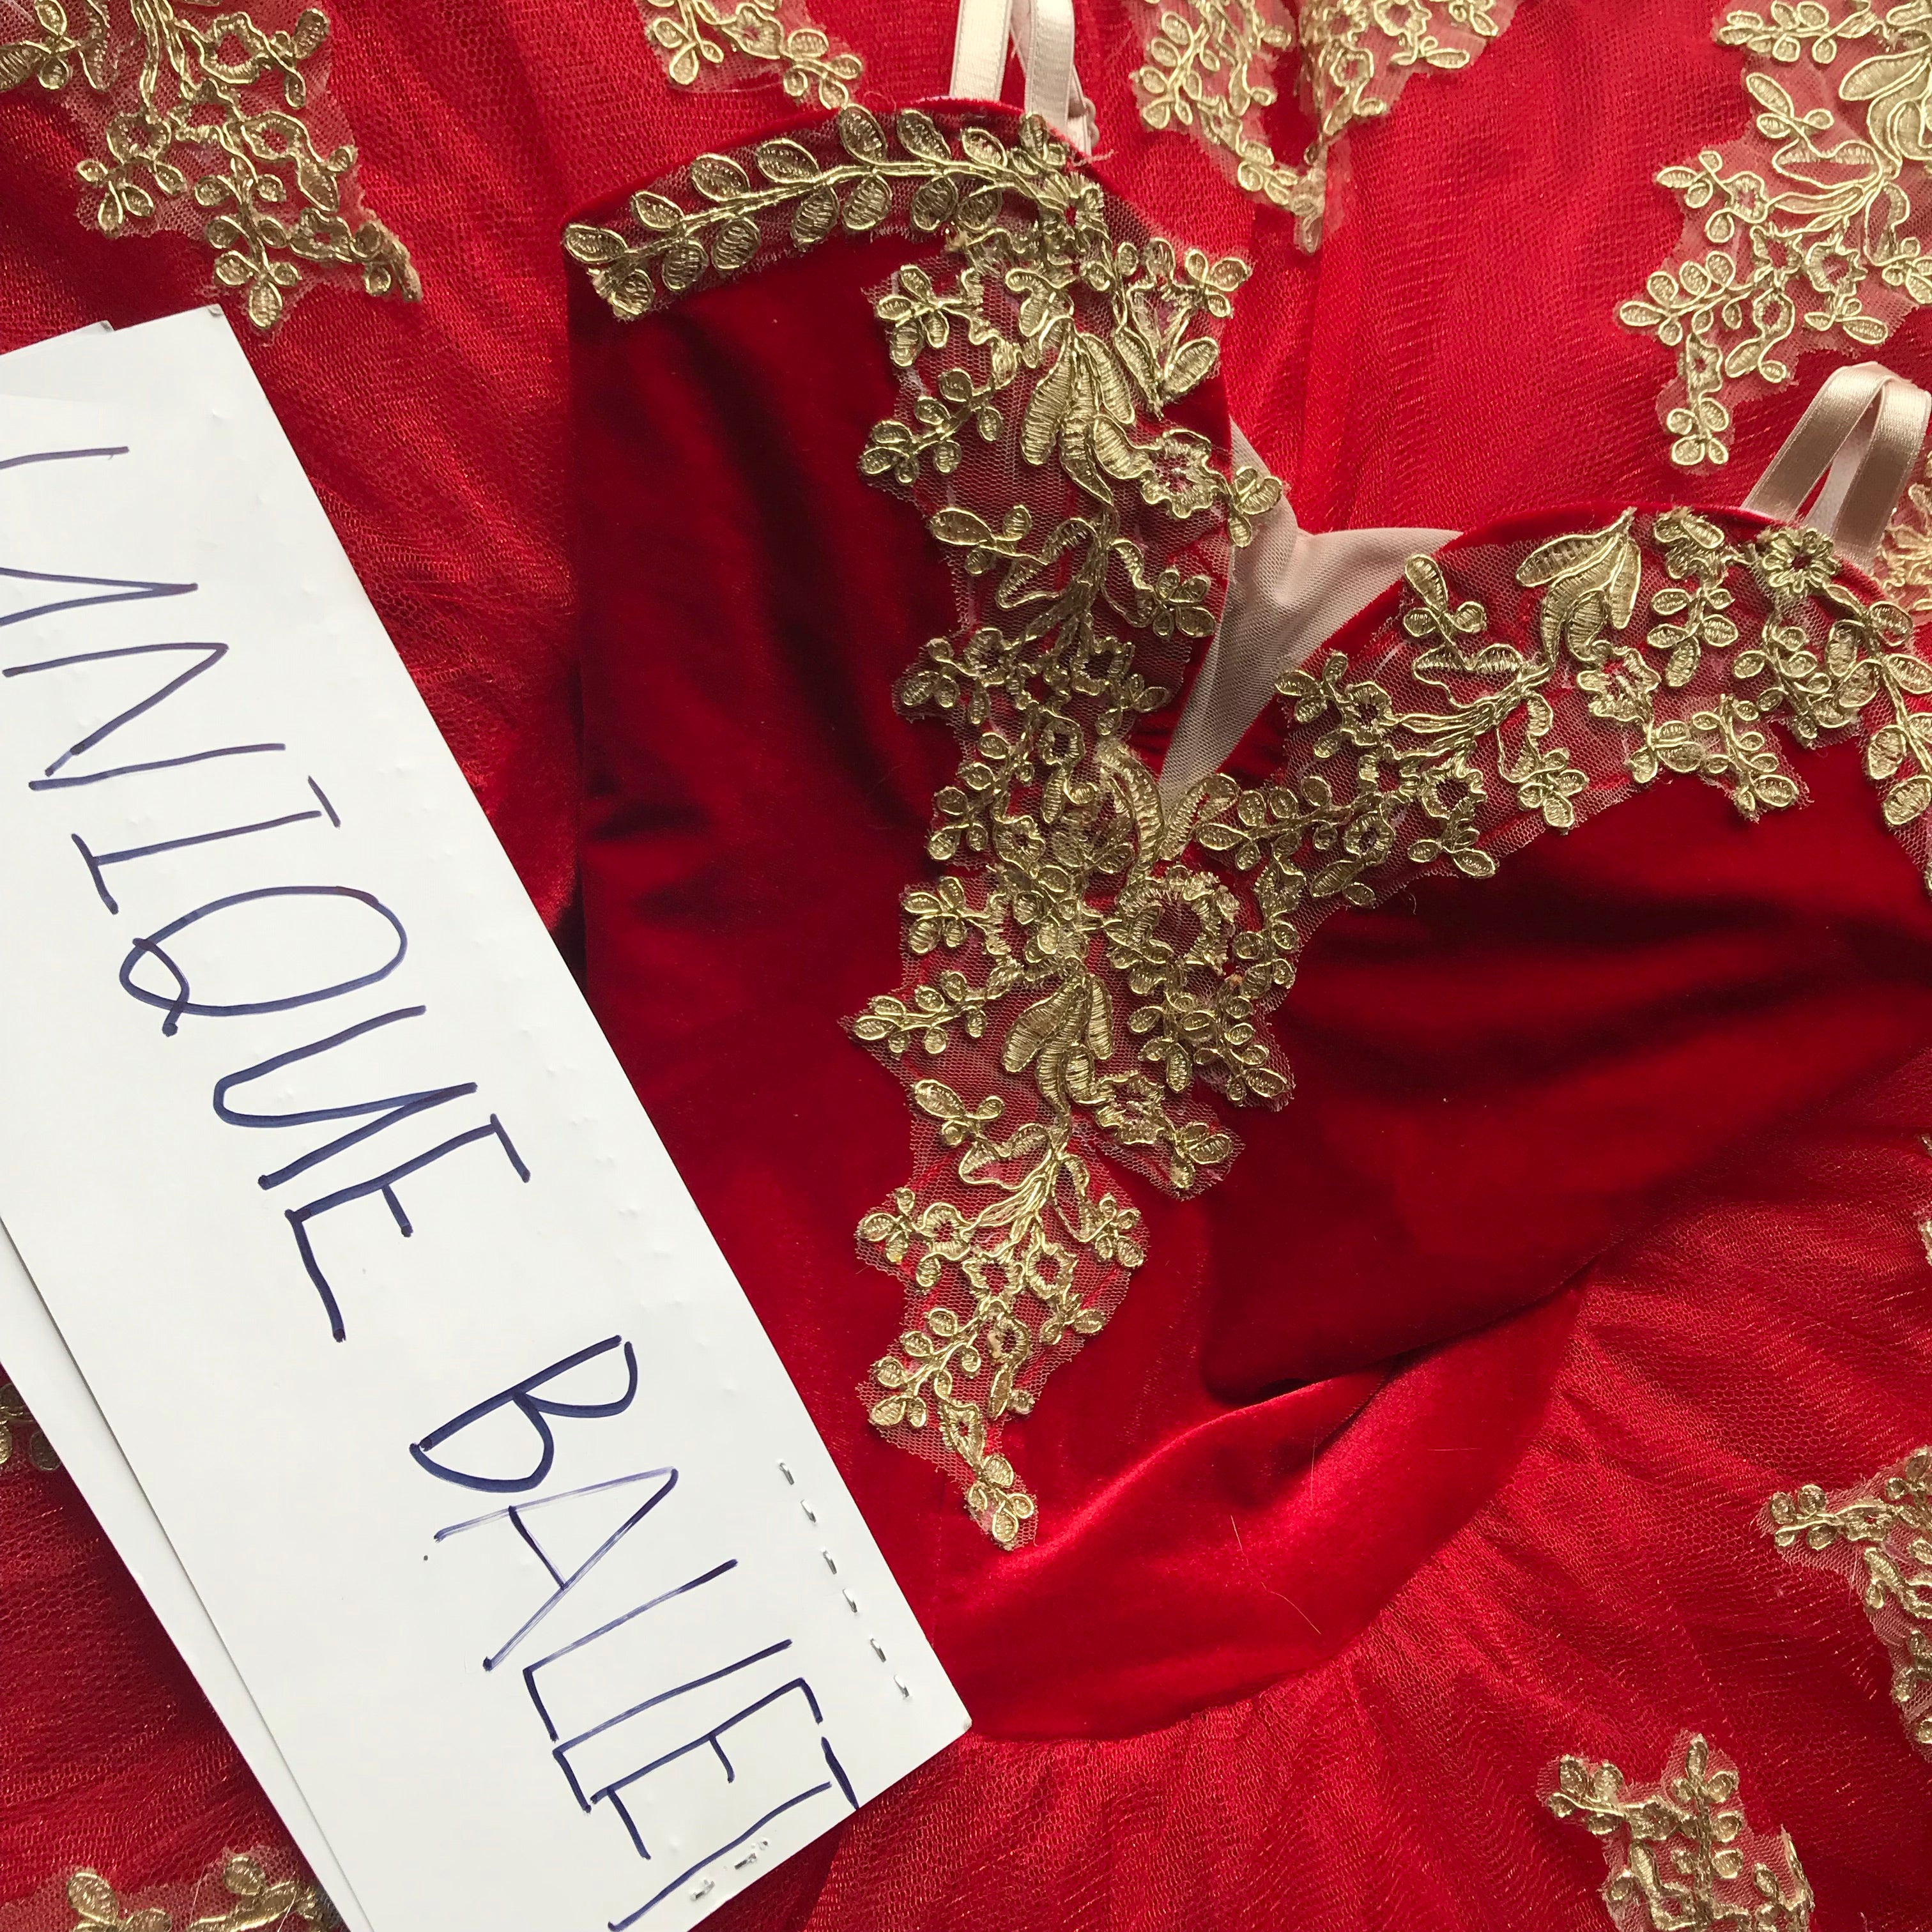 Cost-Effective Red Golden Trims Heart Queen Classic Ballet TuTu Costume